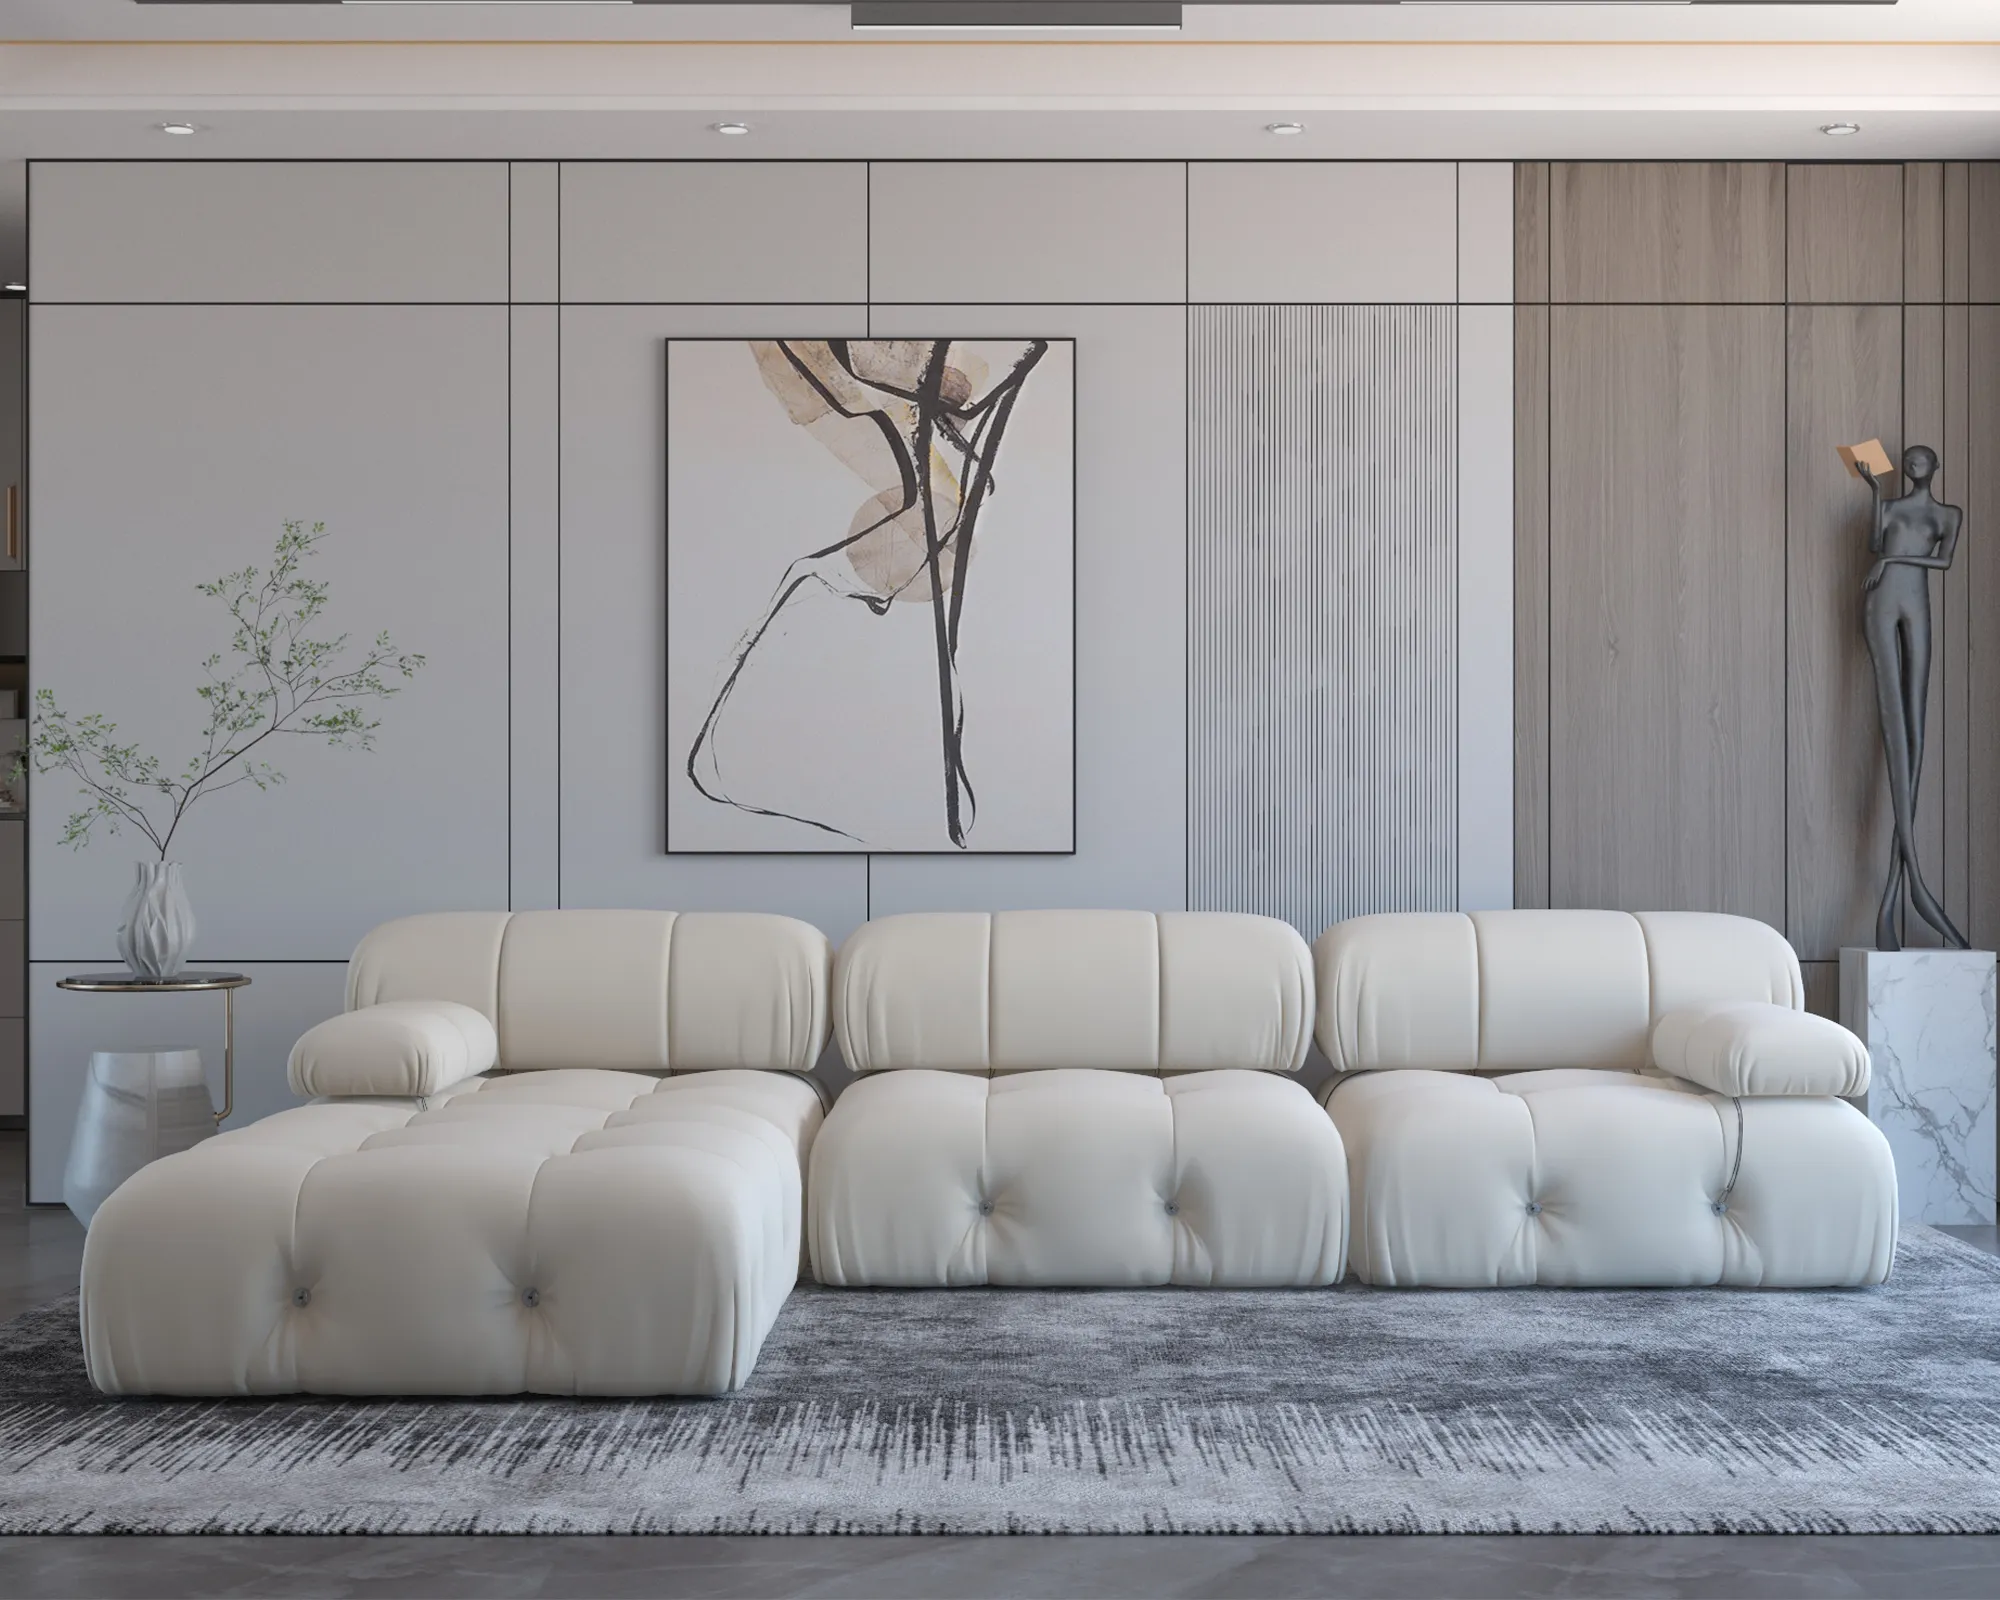 Italian L-Shape Modular Sectional Sofas White Chaise sectional couch sofa indoor Living Room velvet Sofa set